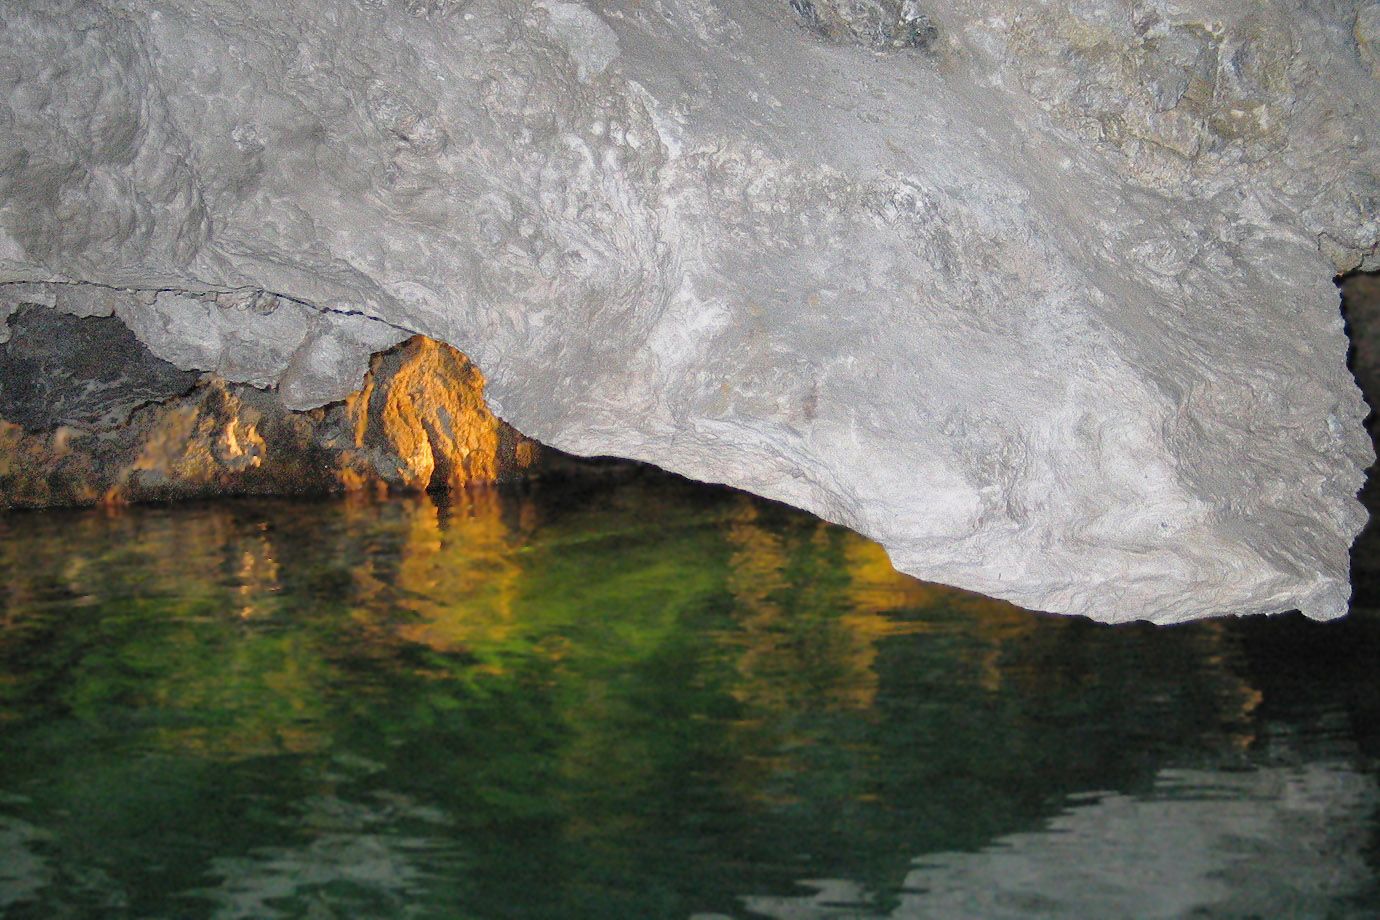 Saint-Léonard underground lake in the Canton Valais